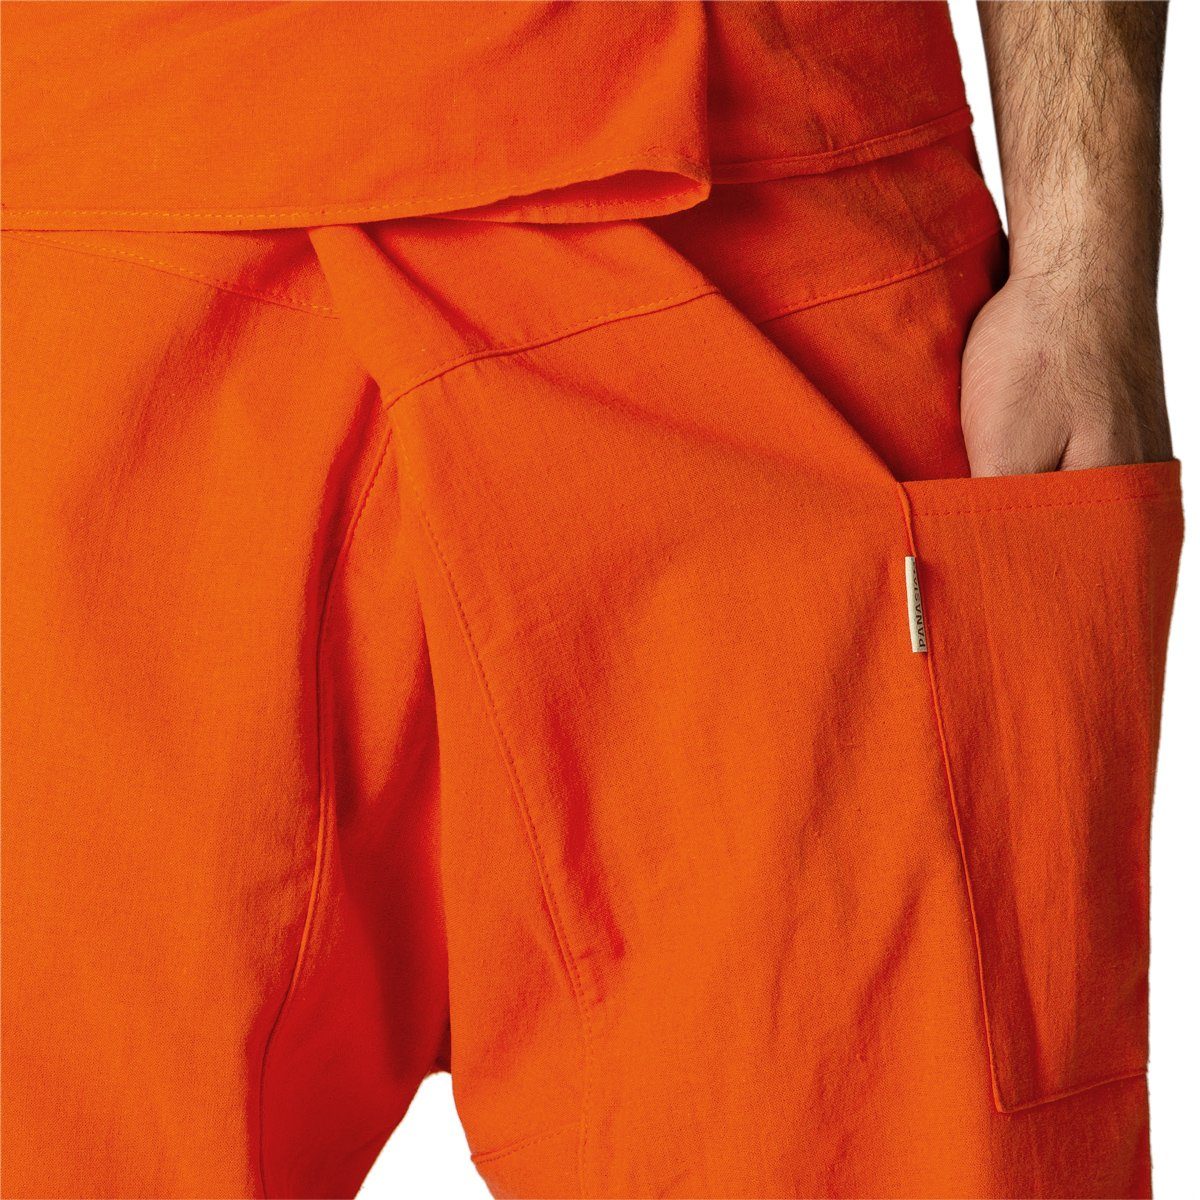 PANASIAM Wellnesshose Thai Fischerhose Orange bequeme Baumwolle fit aus Classic Yogahose als loose Wickelhose Unisex Freizeithose Relaxhose